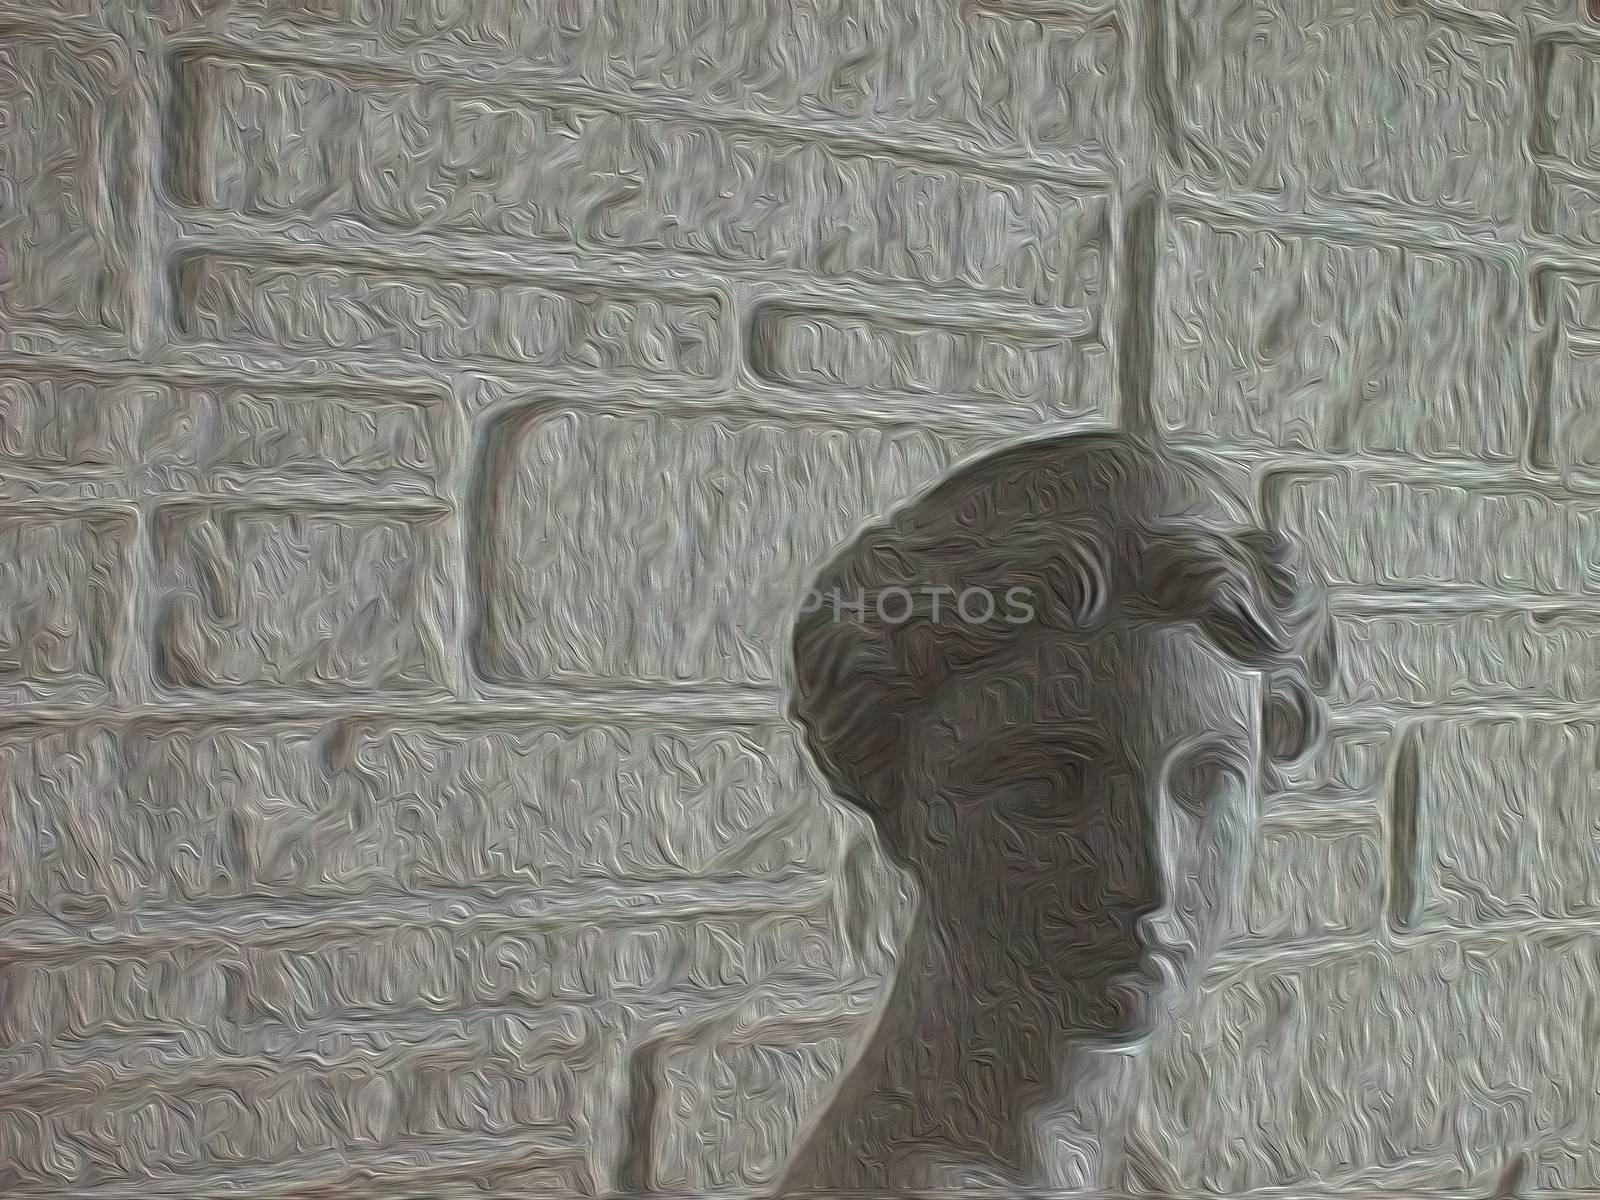 Greek or Roman Marble Statue of Woman